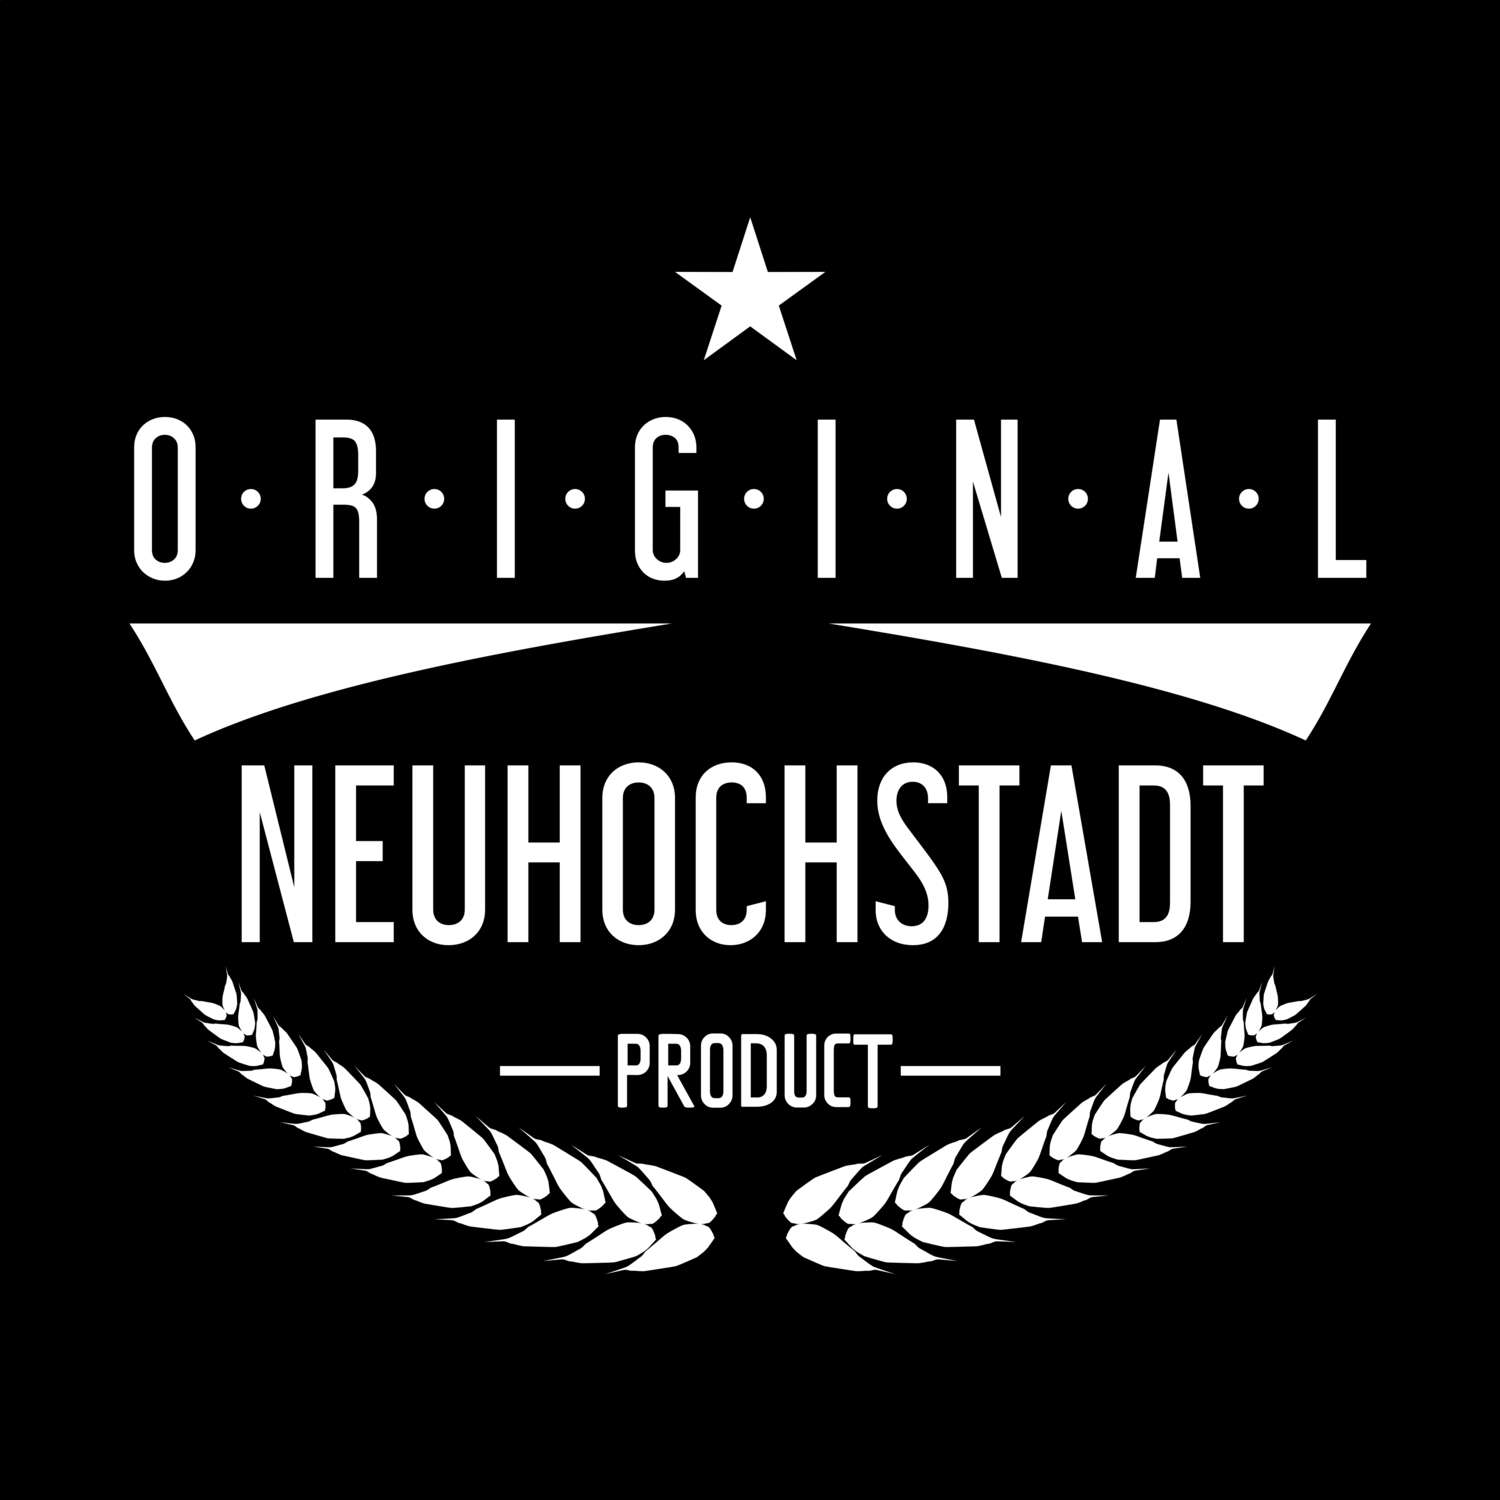 Neuhochstadt T-Shirt »Original Product«